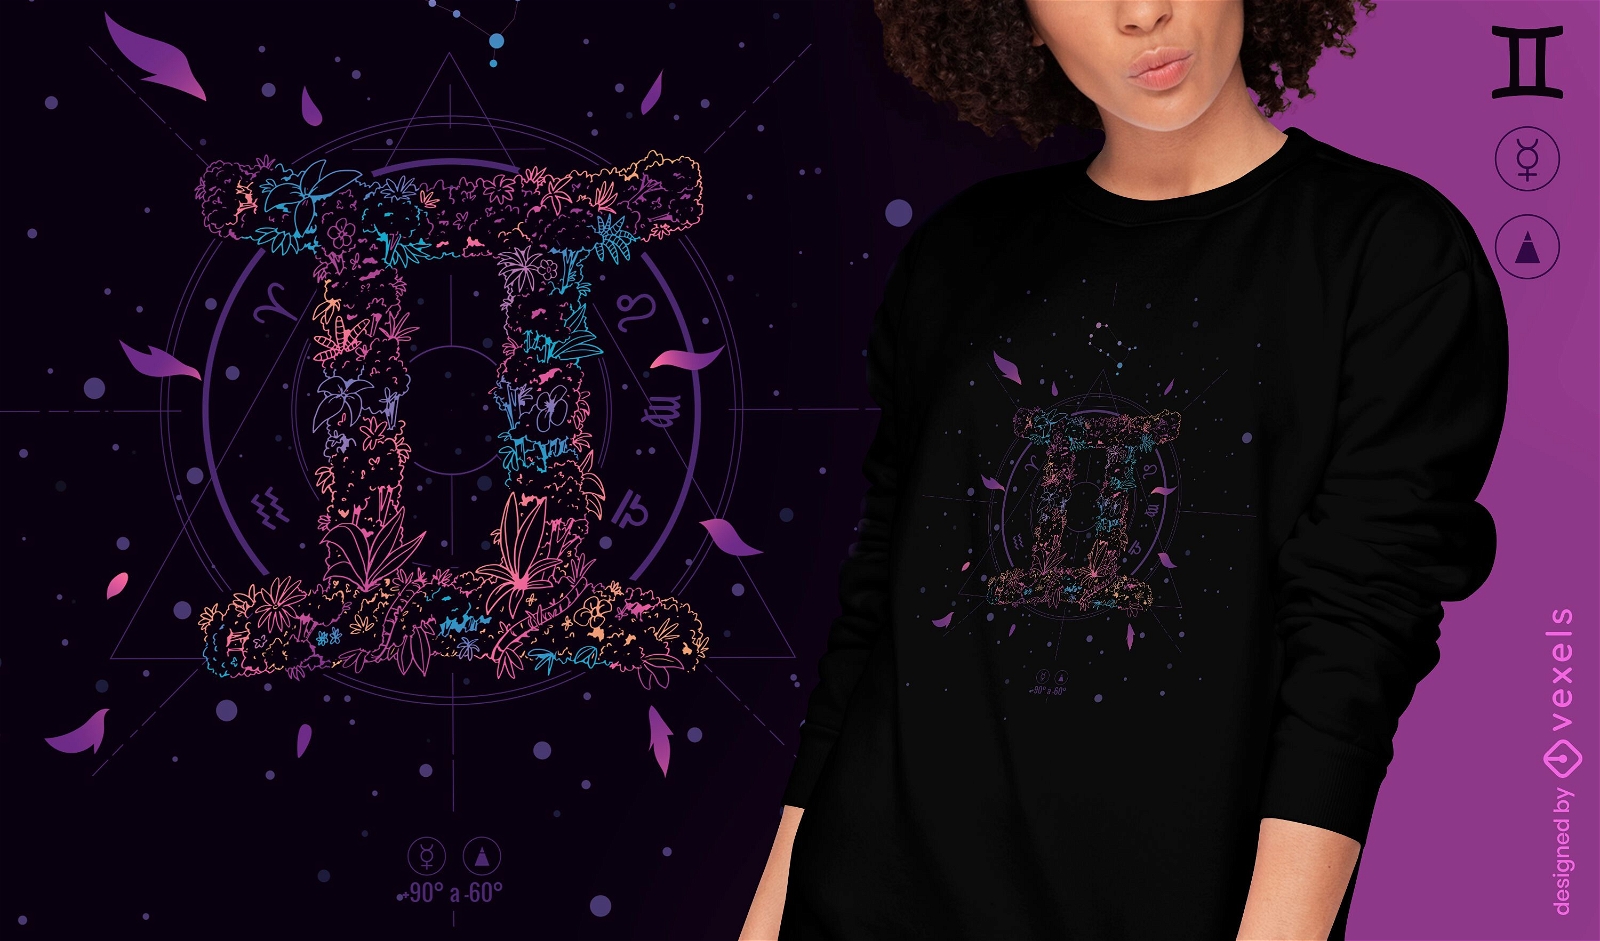 Gemini floral zodiac sign t-shirt design